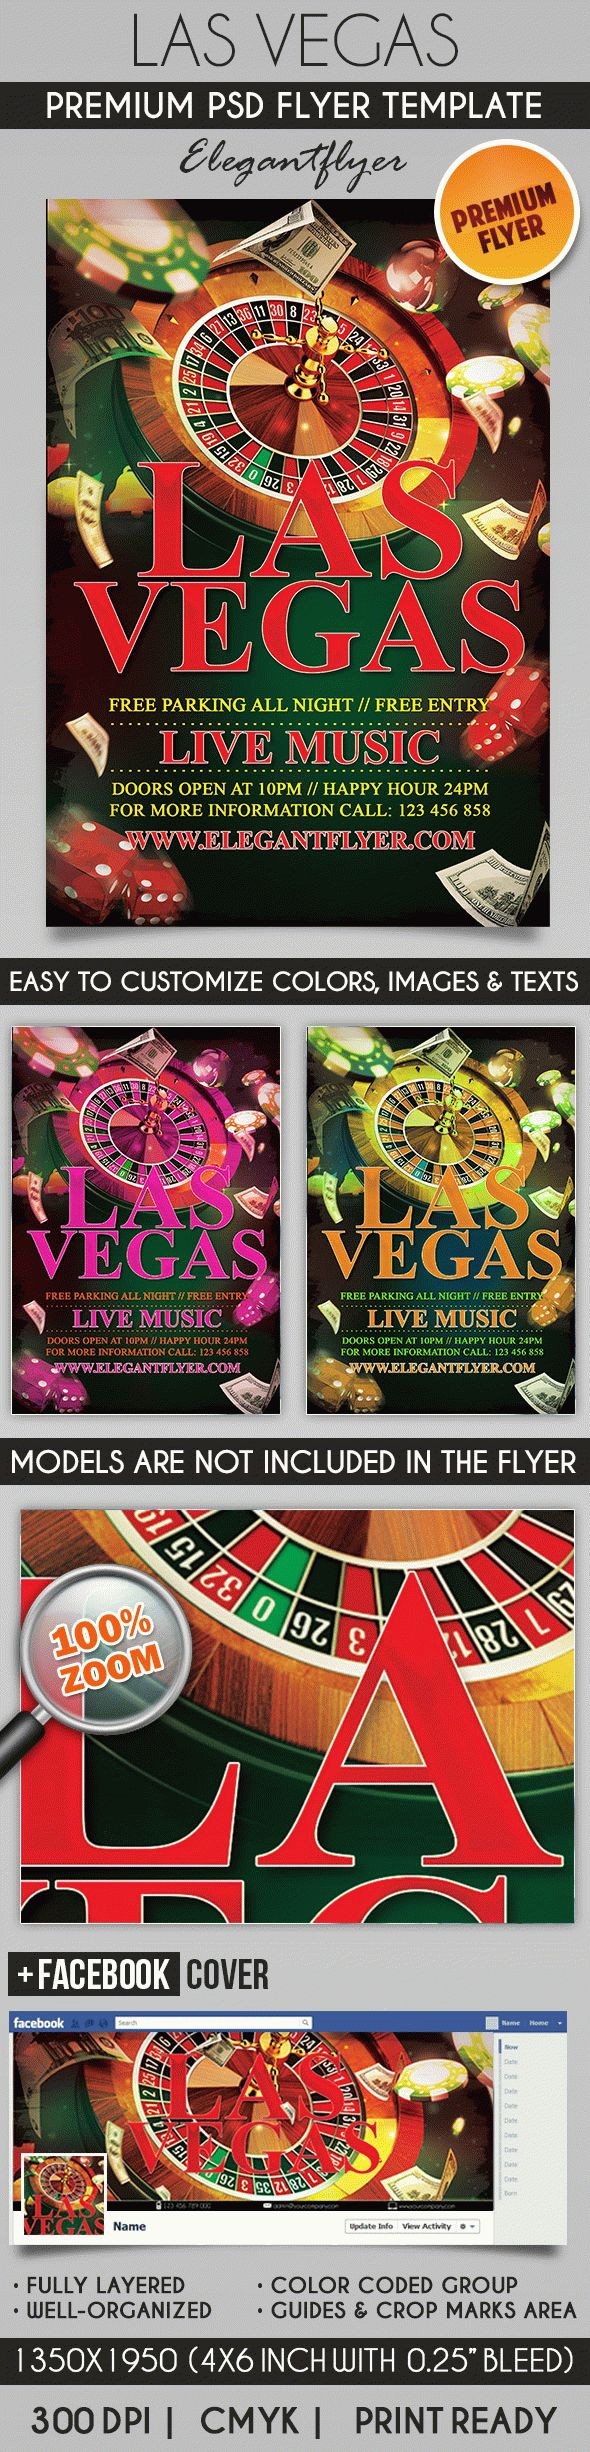 Flyer Template For Las Vegas by ElegantFlyer